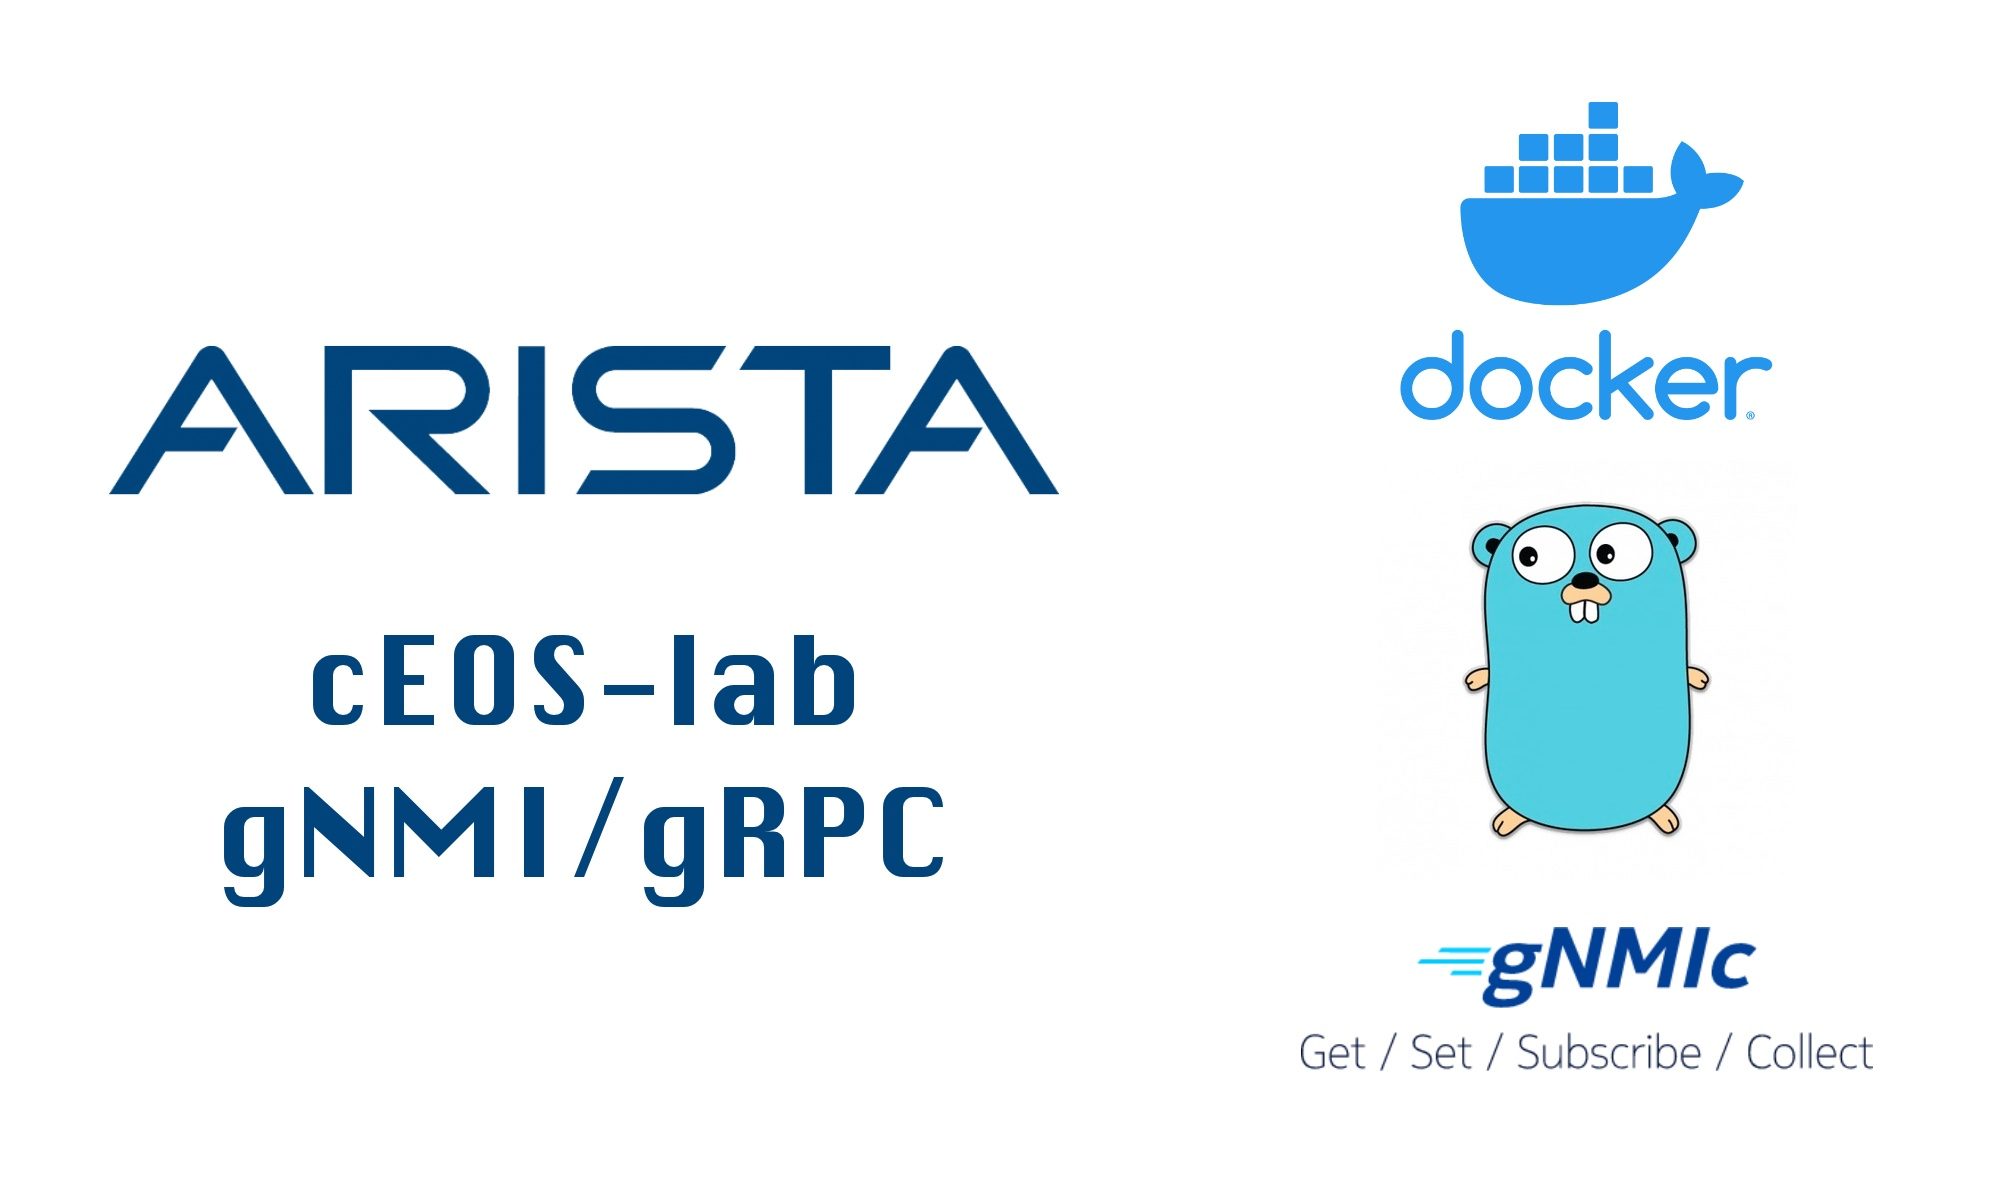 Arista switch virtuel cEOS-lab gNMI/gRPC